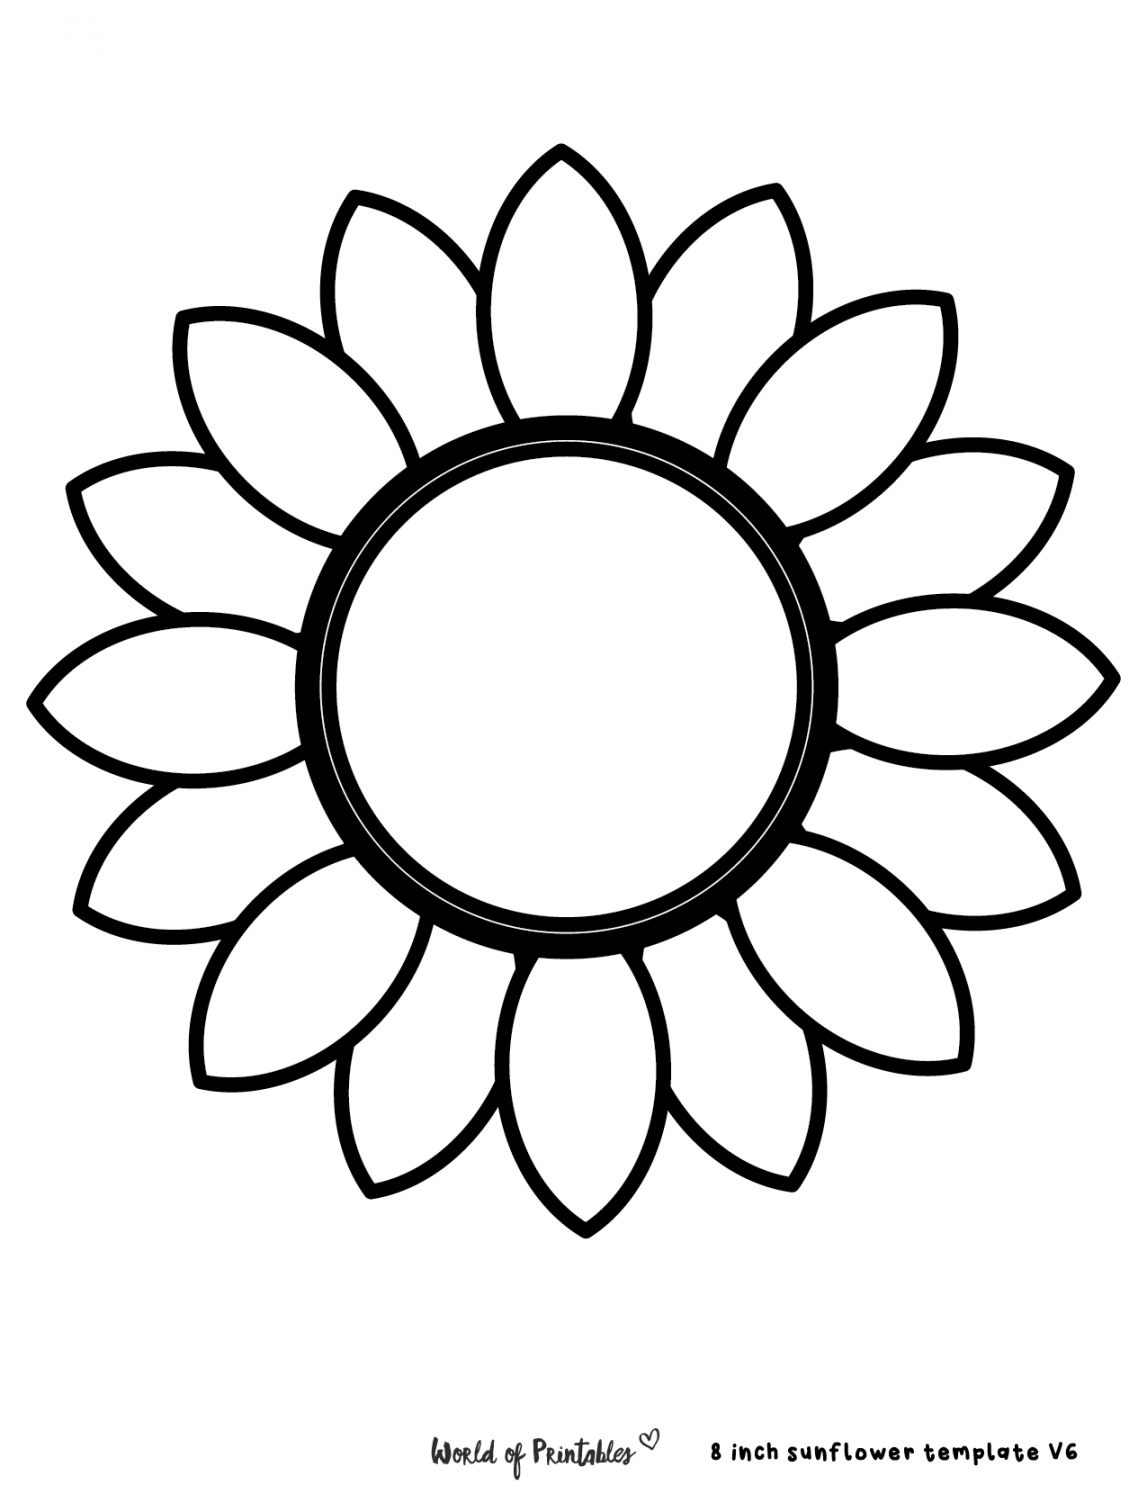 Best Sunflower Templates - World of Printables - FREE Printables - Printable Cut Out Sunflower Template